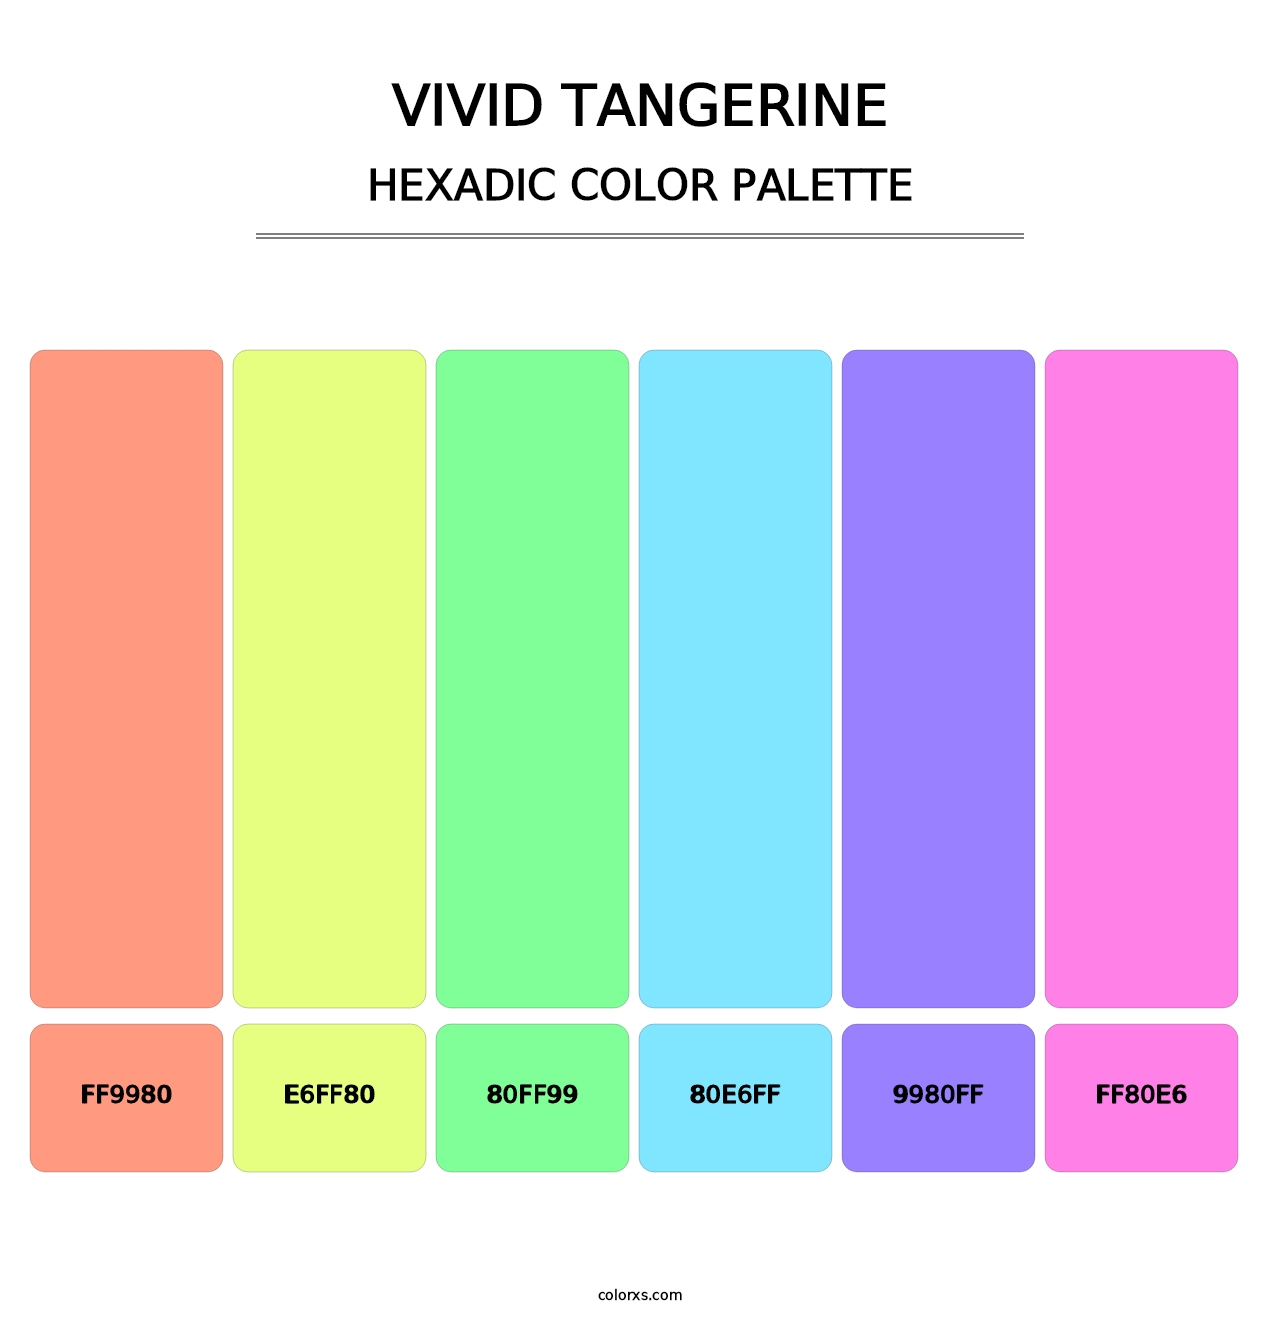 Vivid Tangerine - Hexadic Color Palette